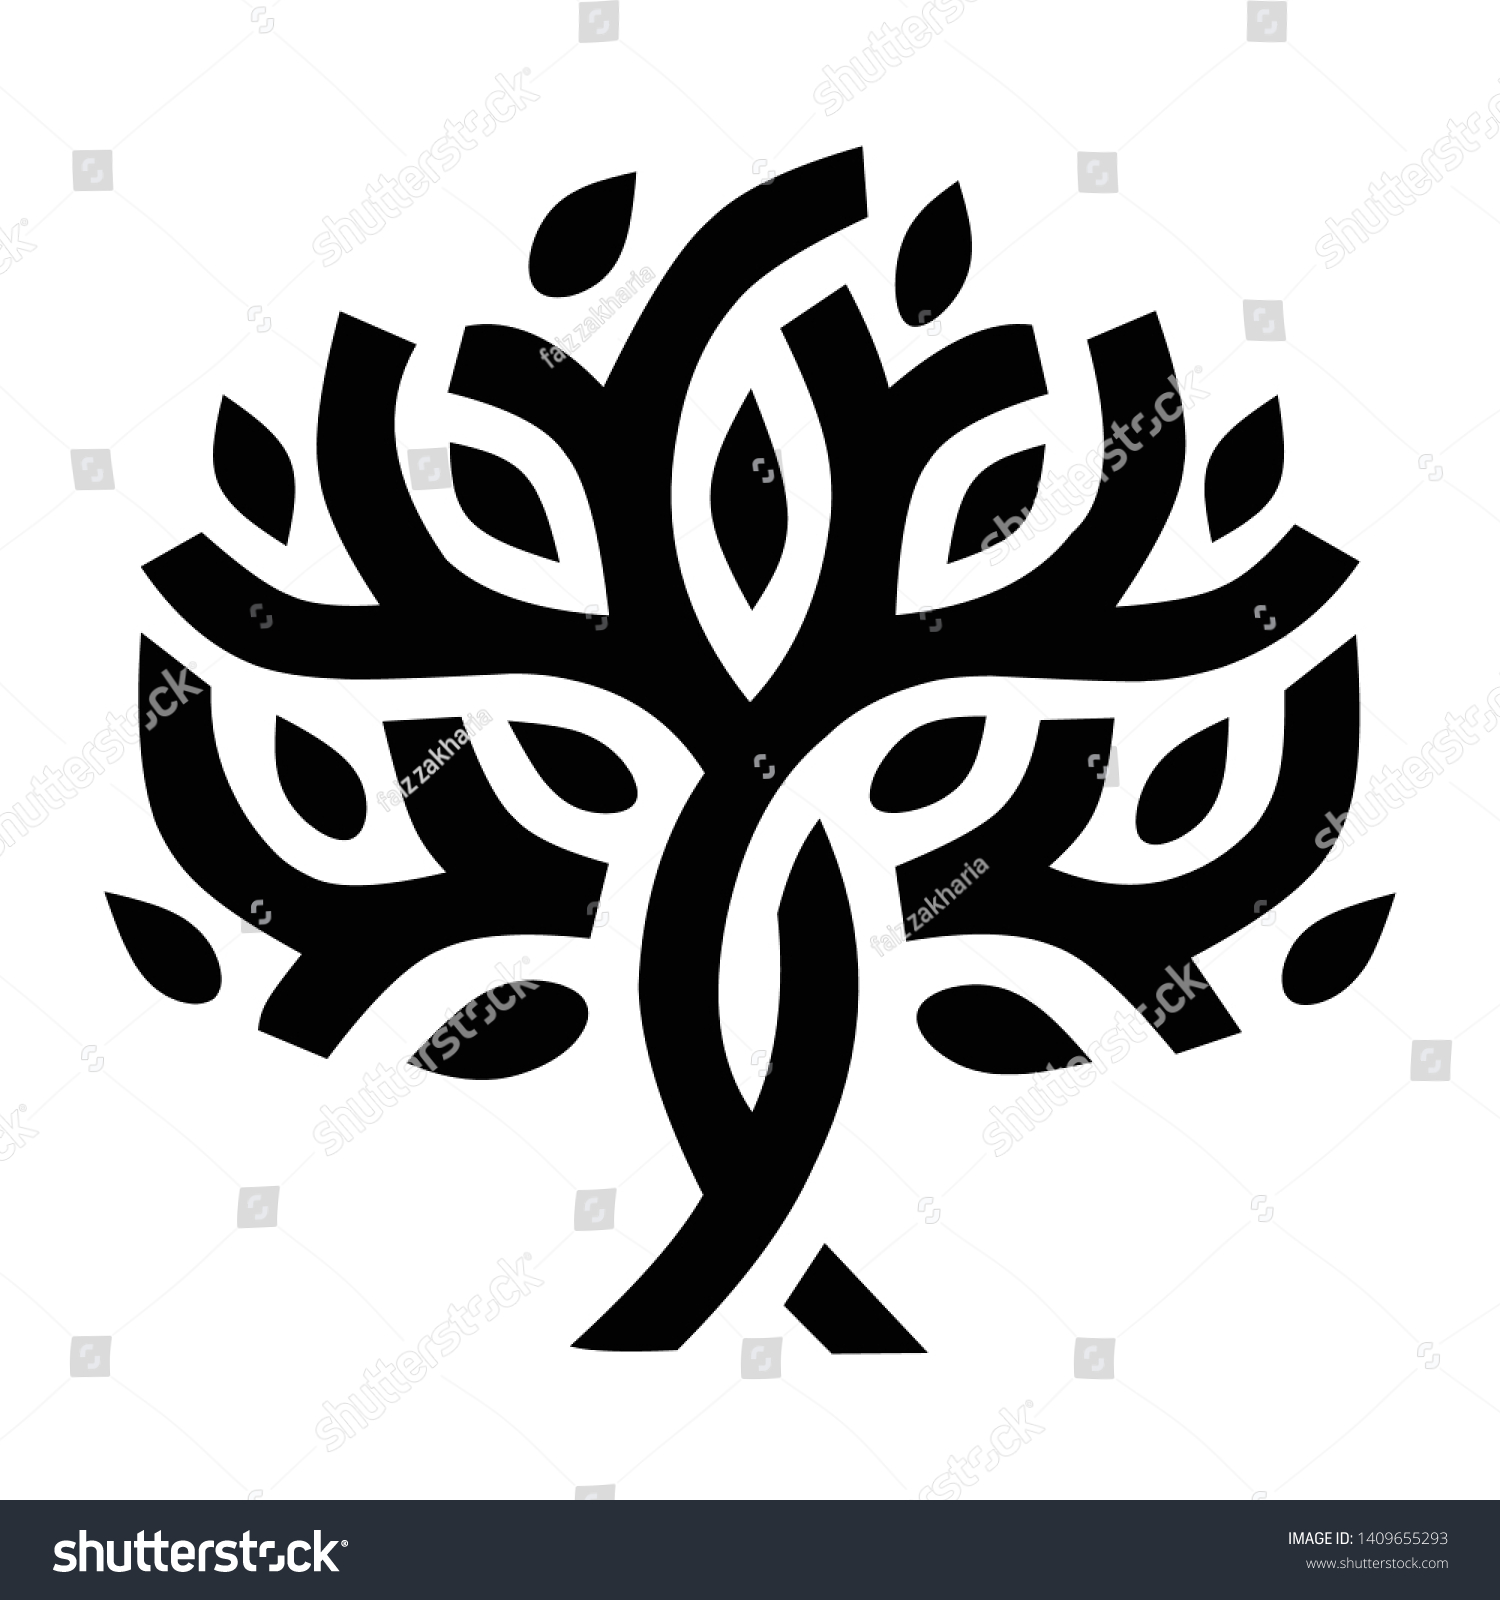 SVG of Illustration of banyan tree for creative logos svg